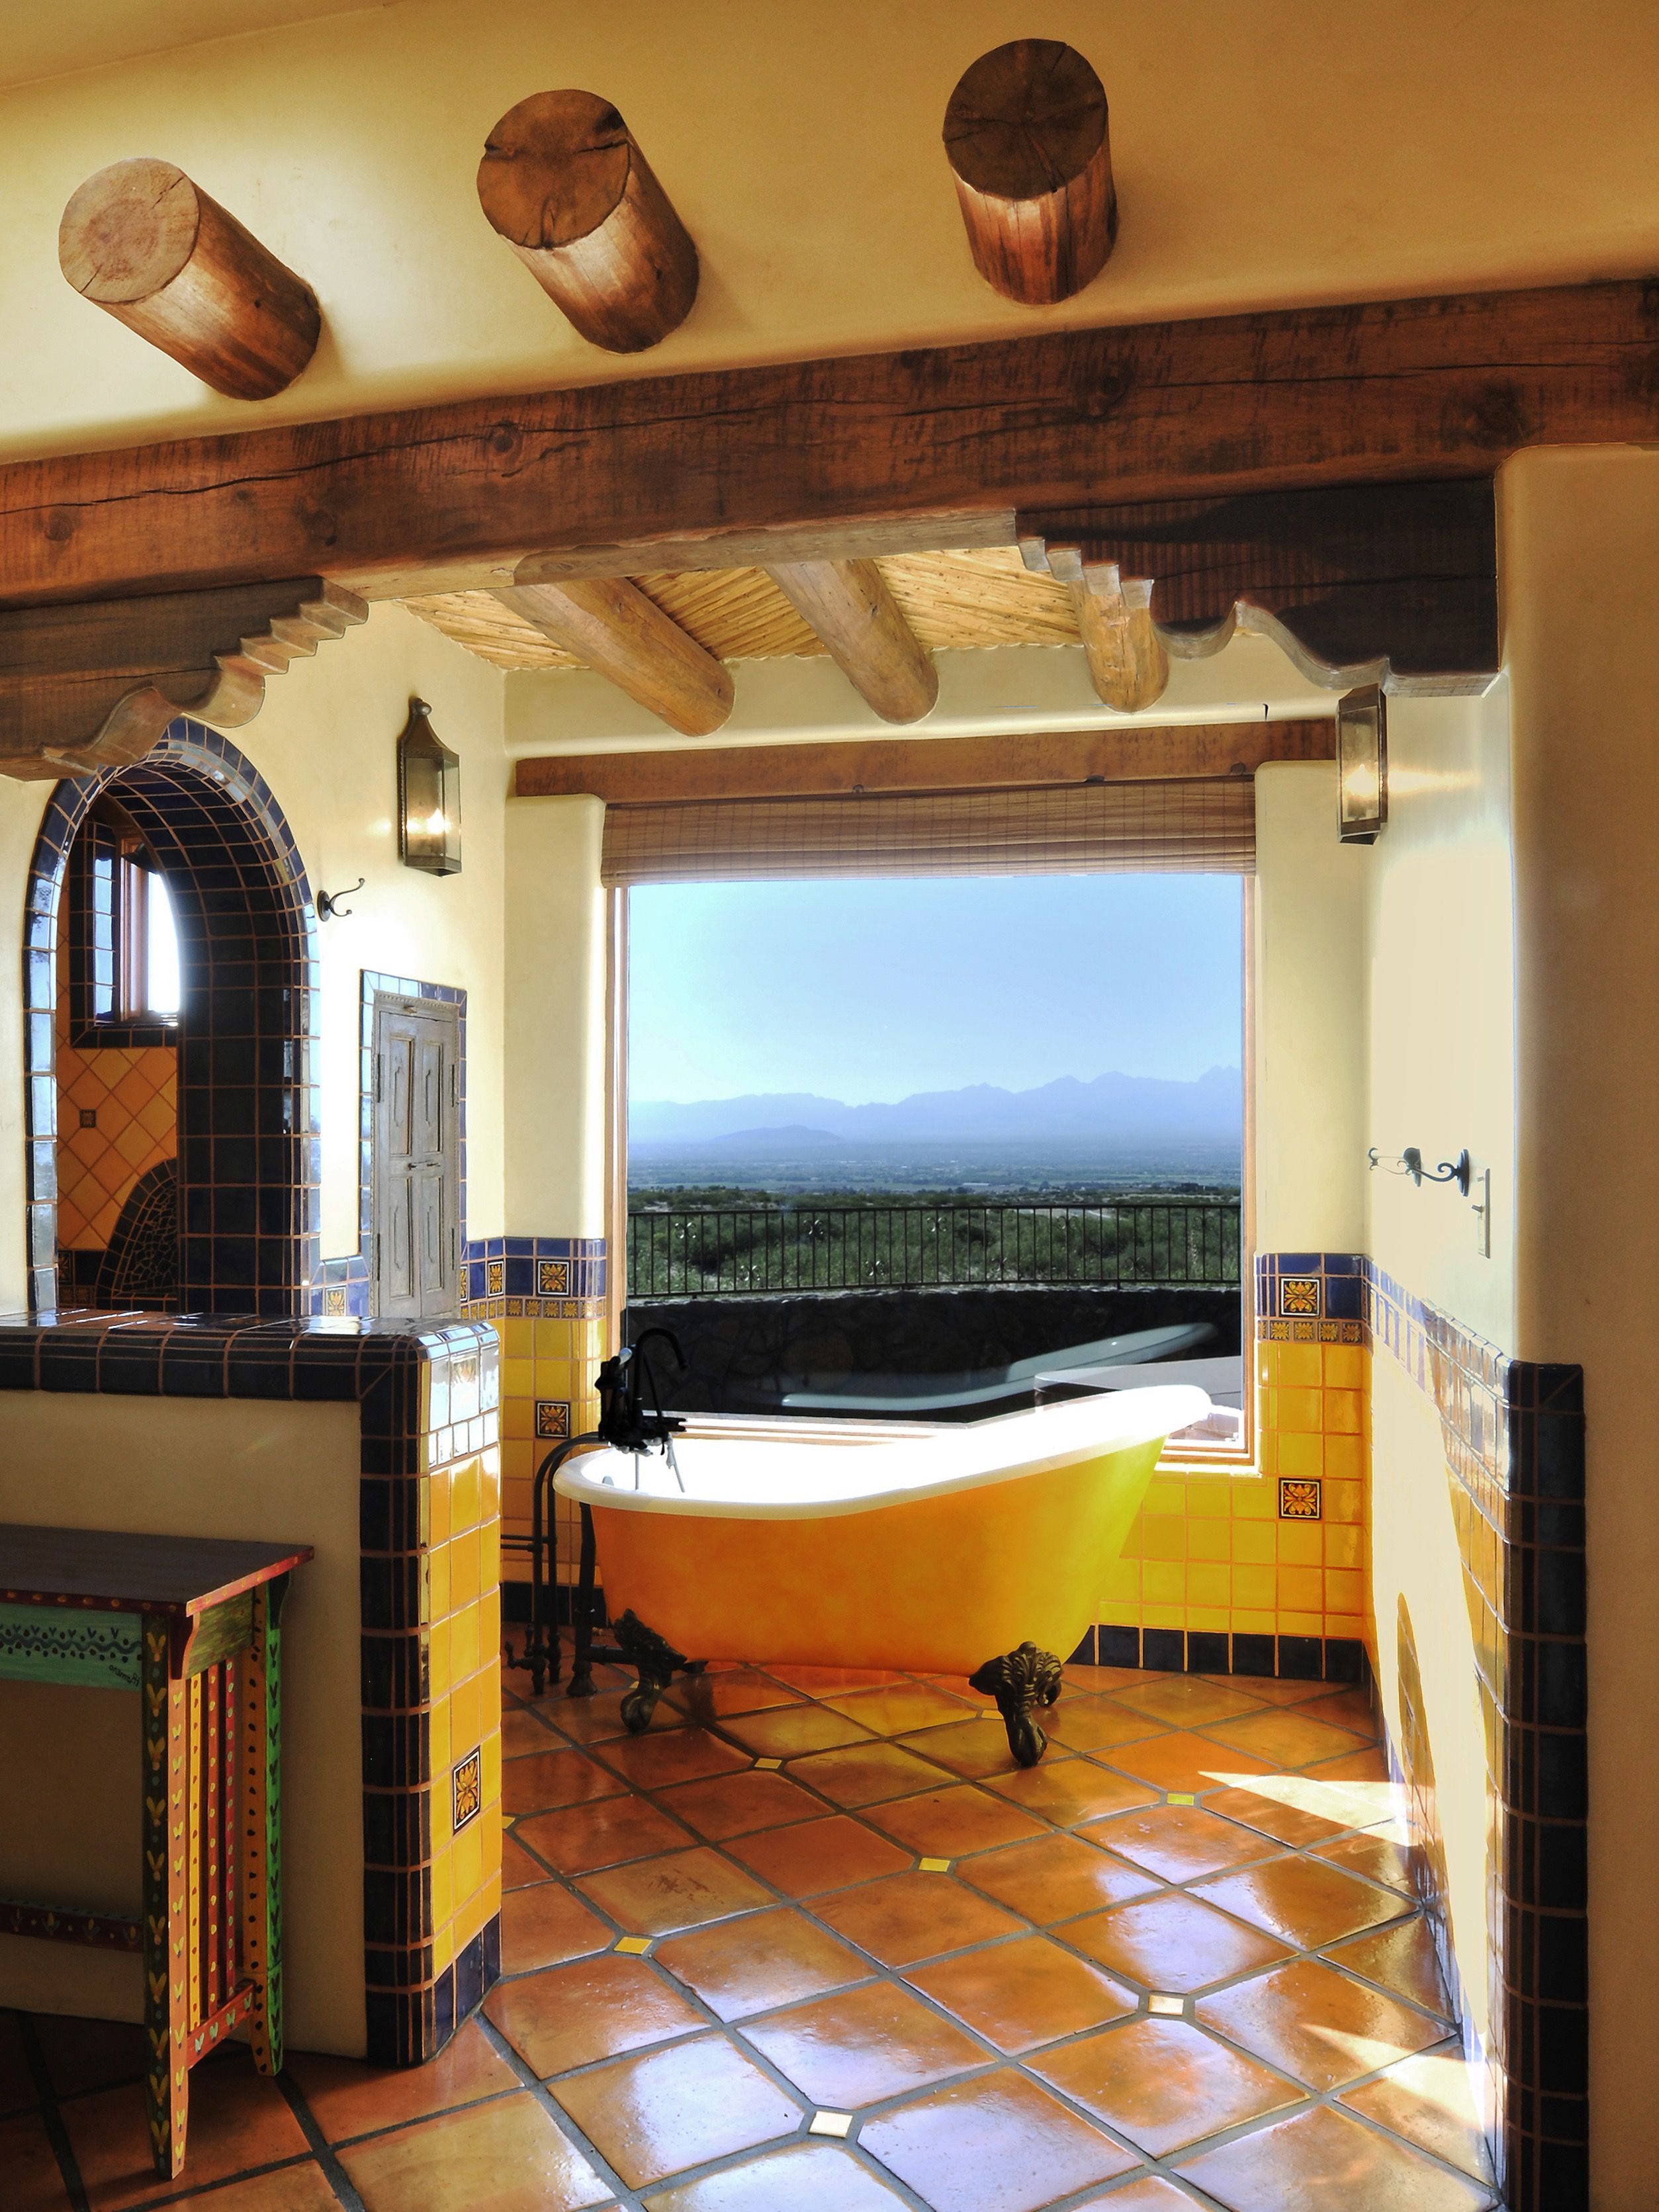 Tiled Spanish Style Retro Bathroom Design (View 15 of 20)